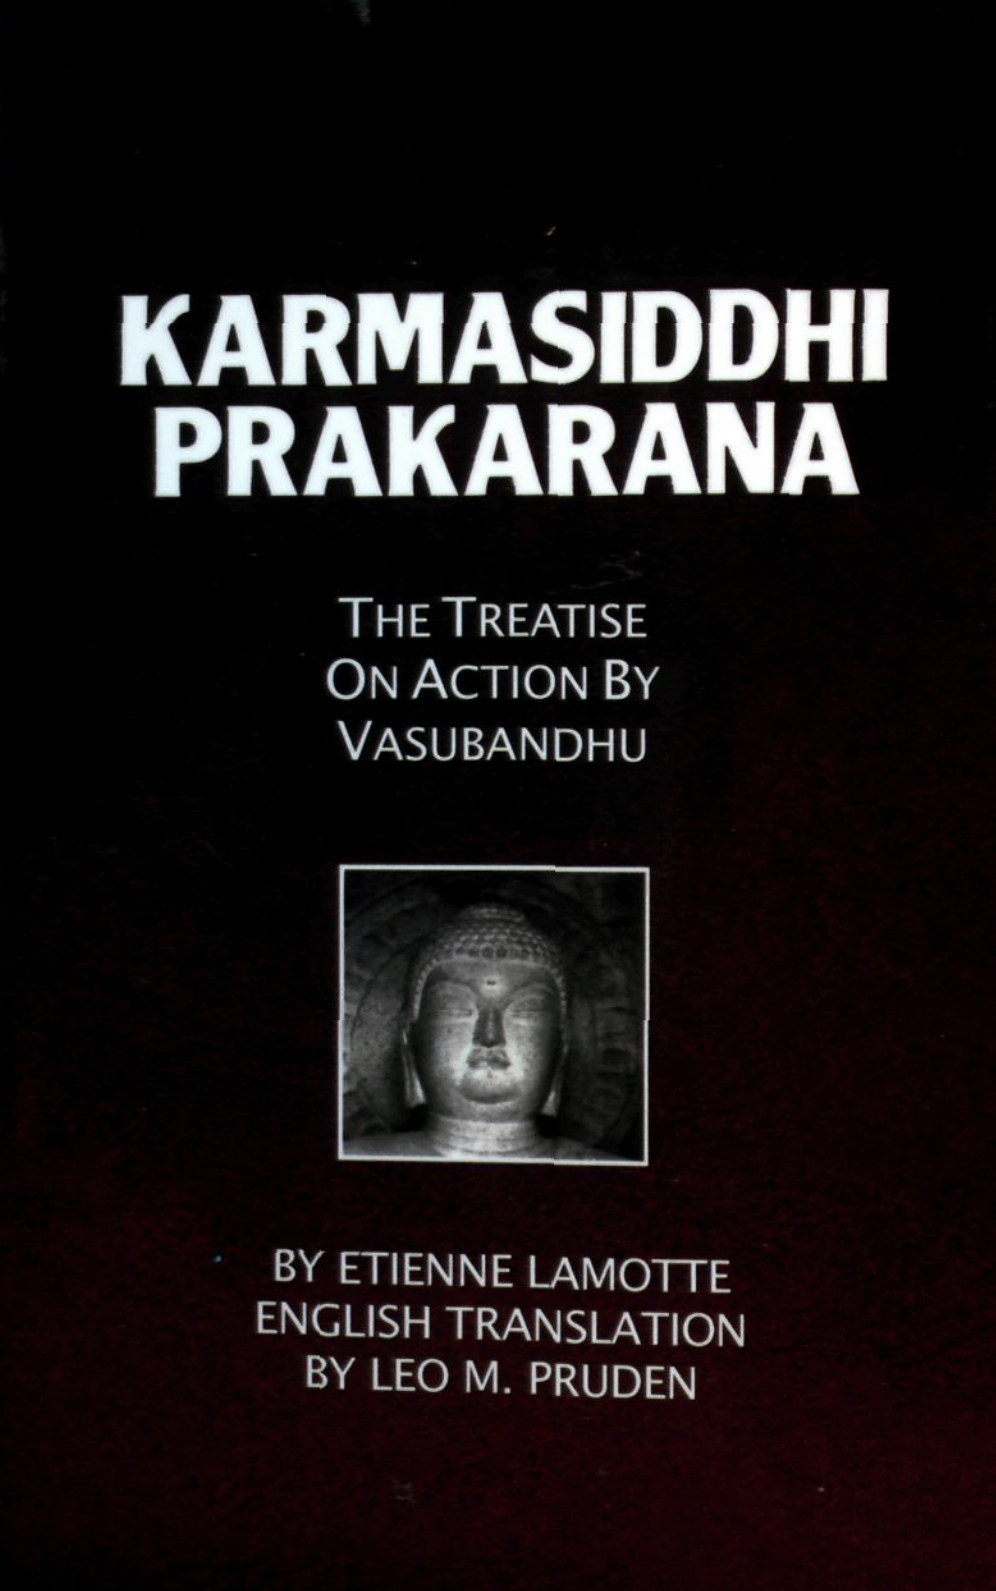 Karmasiddhiprakarana The Treatise on Action by Vasubandhu-front.jpg